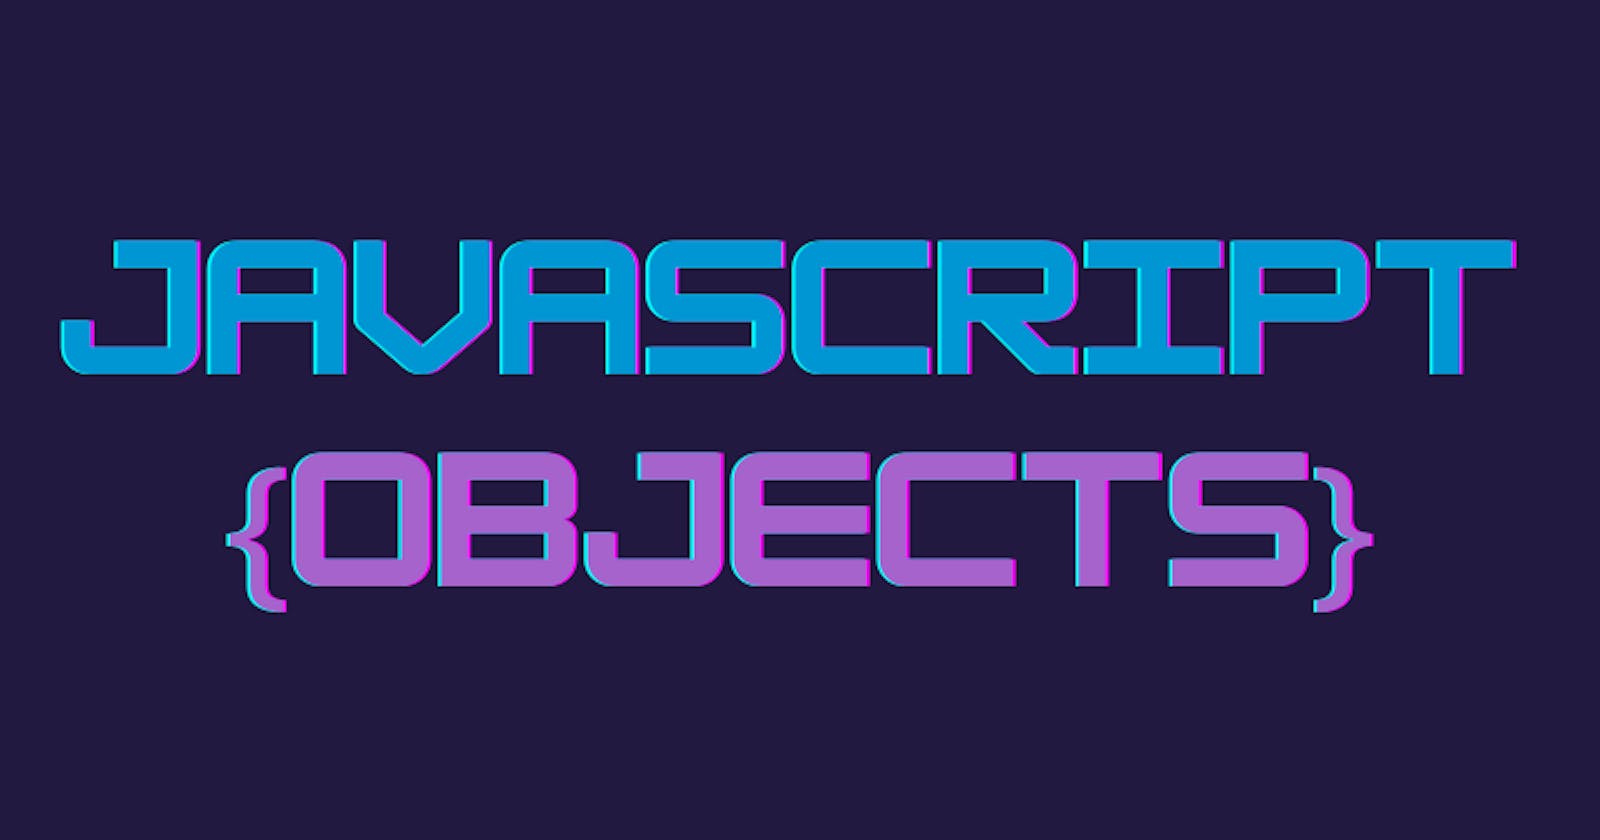 Javascript Objects